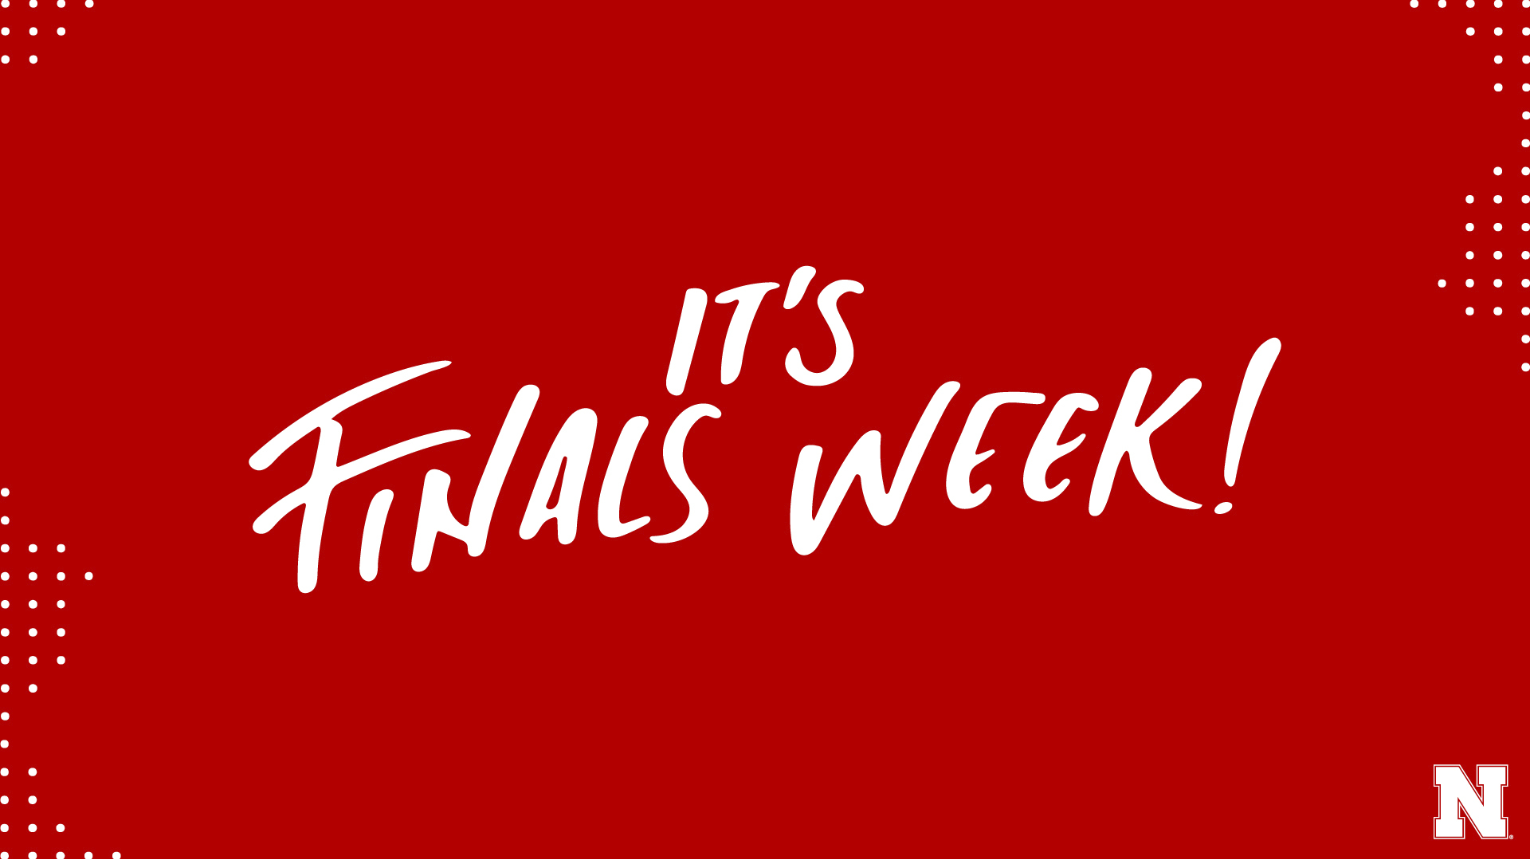 happy-finals-week-huskers-good-luck-announce-university-of-nebraska-lincoln